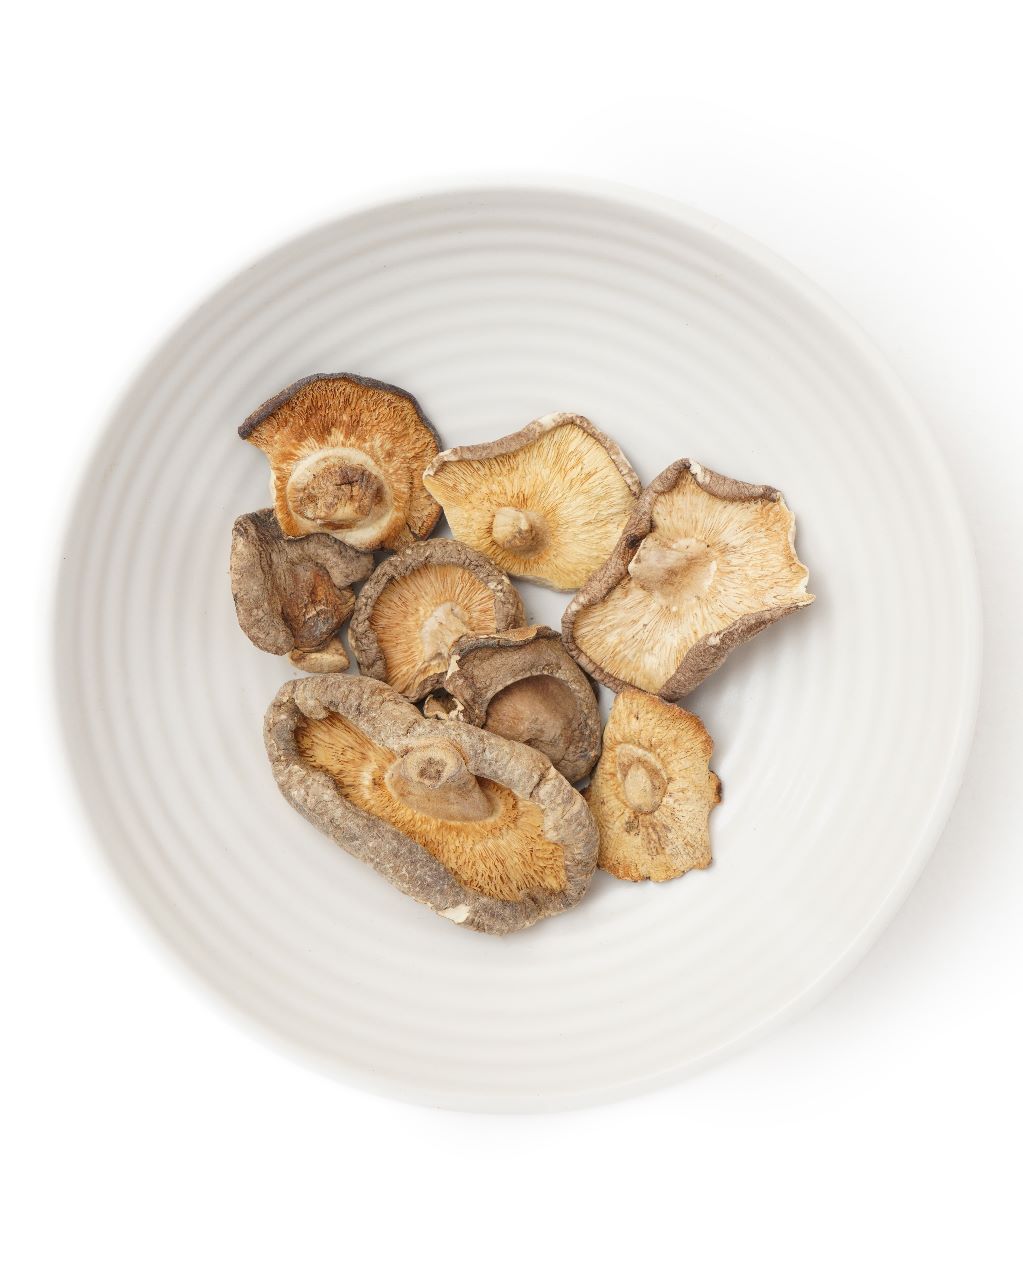 Dry Shiitake Mushrooms